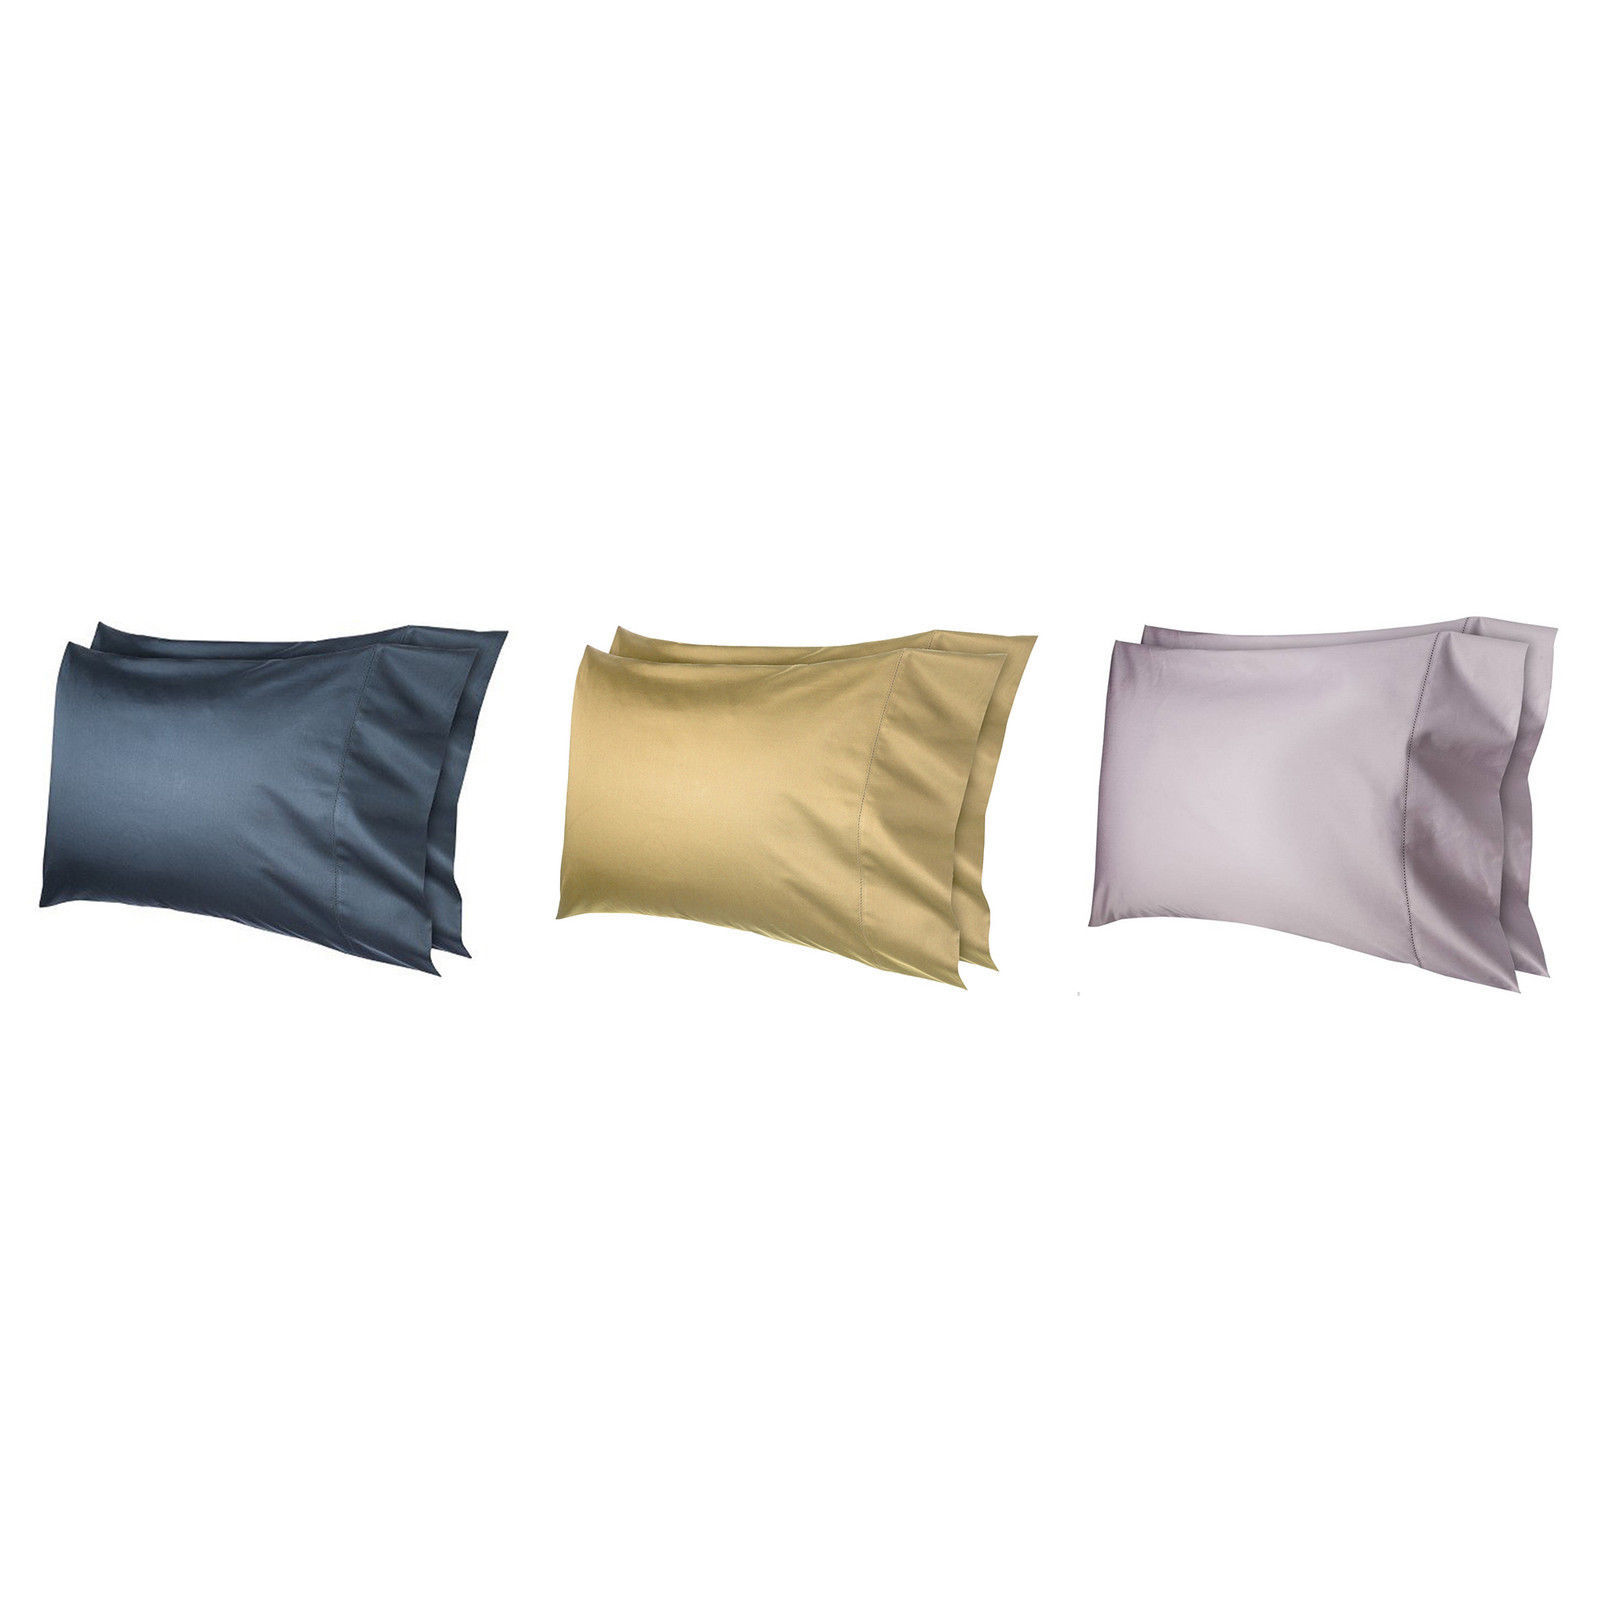 NEW Fieldcrest Luxury Soft 600 Thread Count 100% Egyption Cotton 2 Pillowcases - $34.99 - $39.99